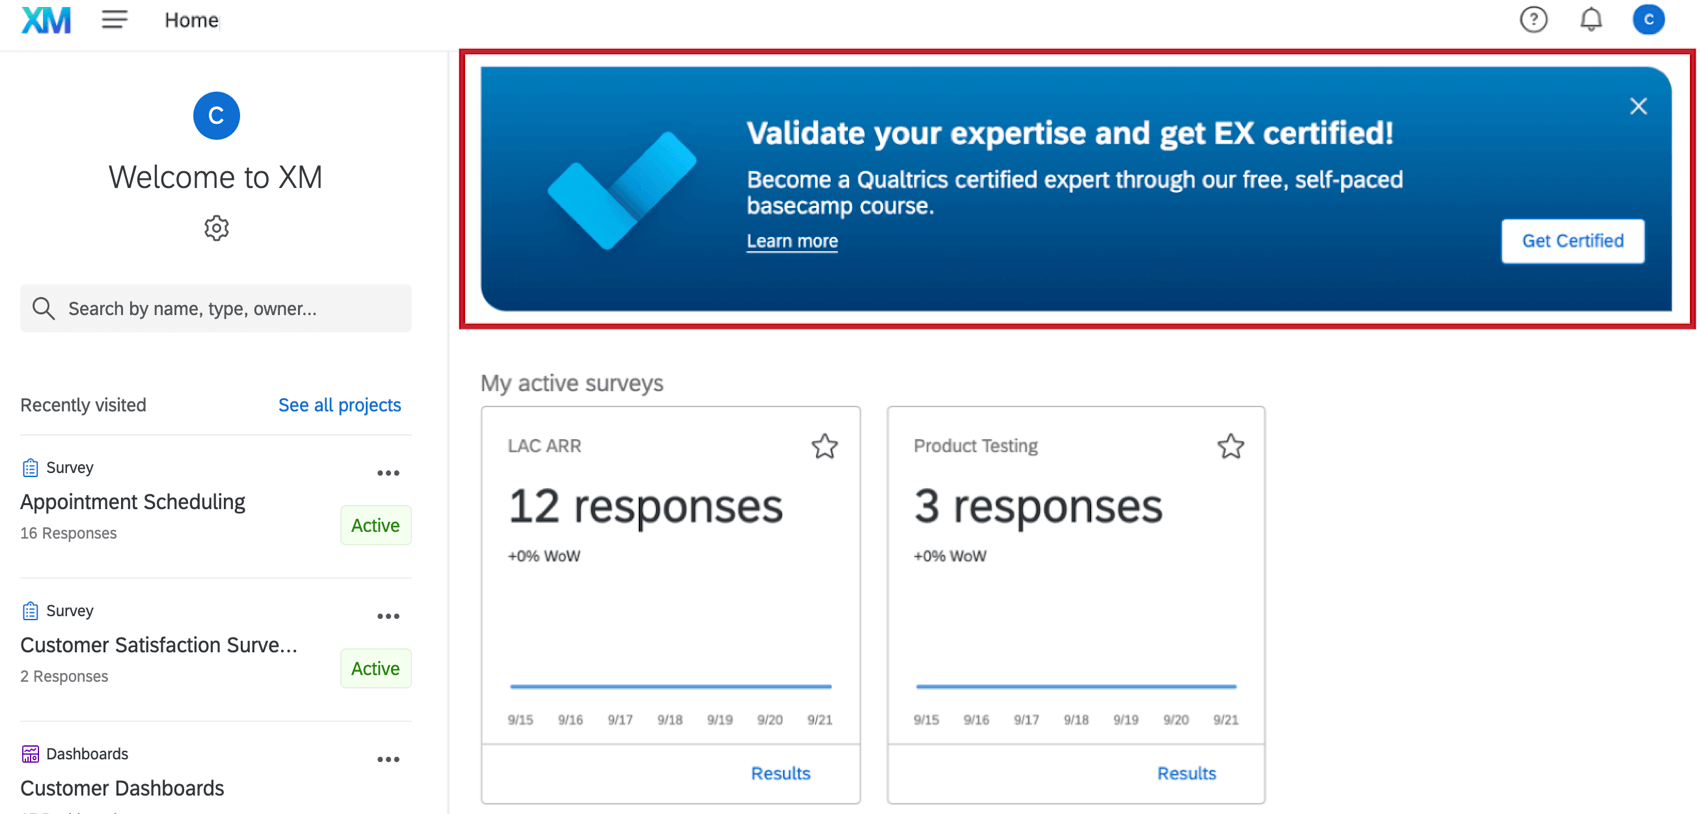 Add A Survey Start Page - ResponseSuite Blog